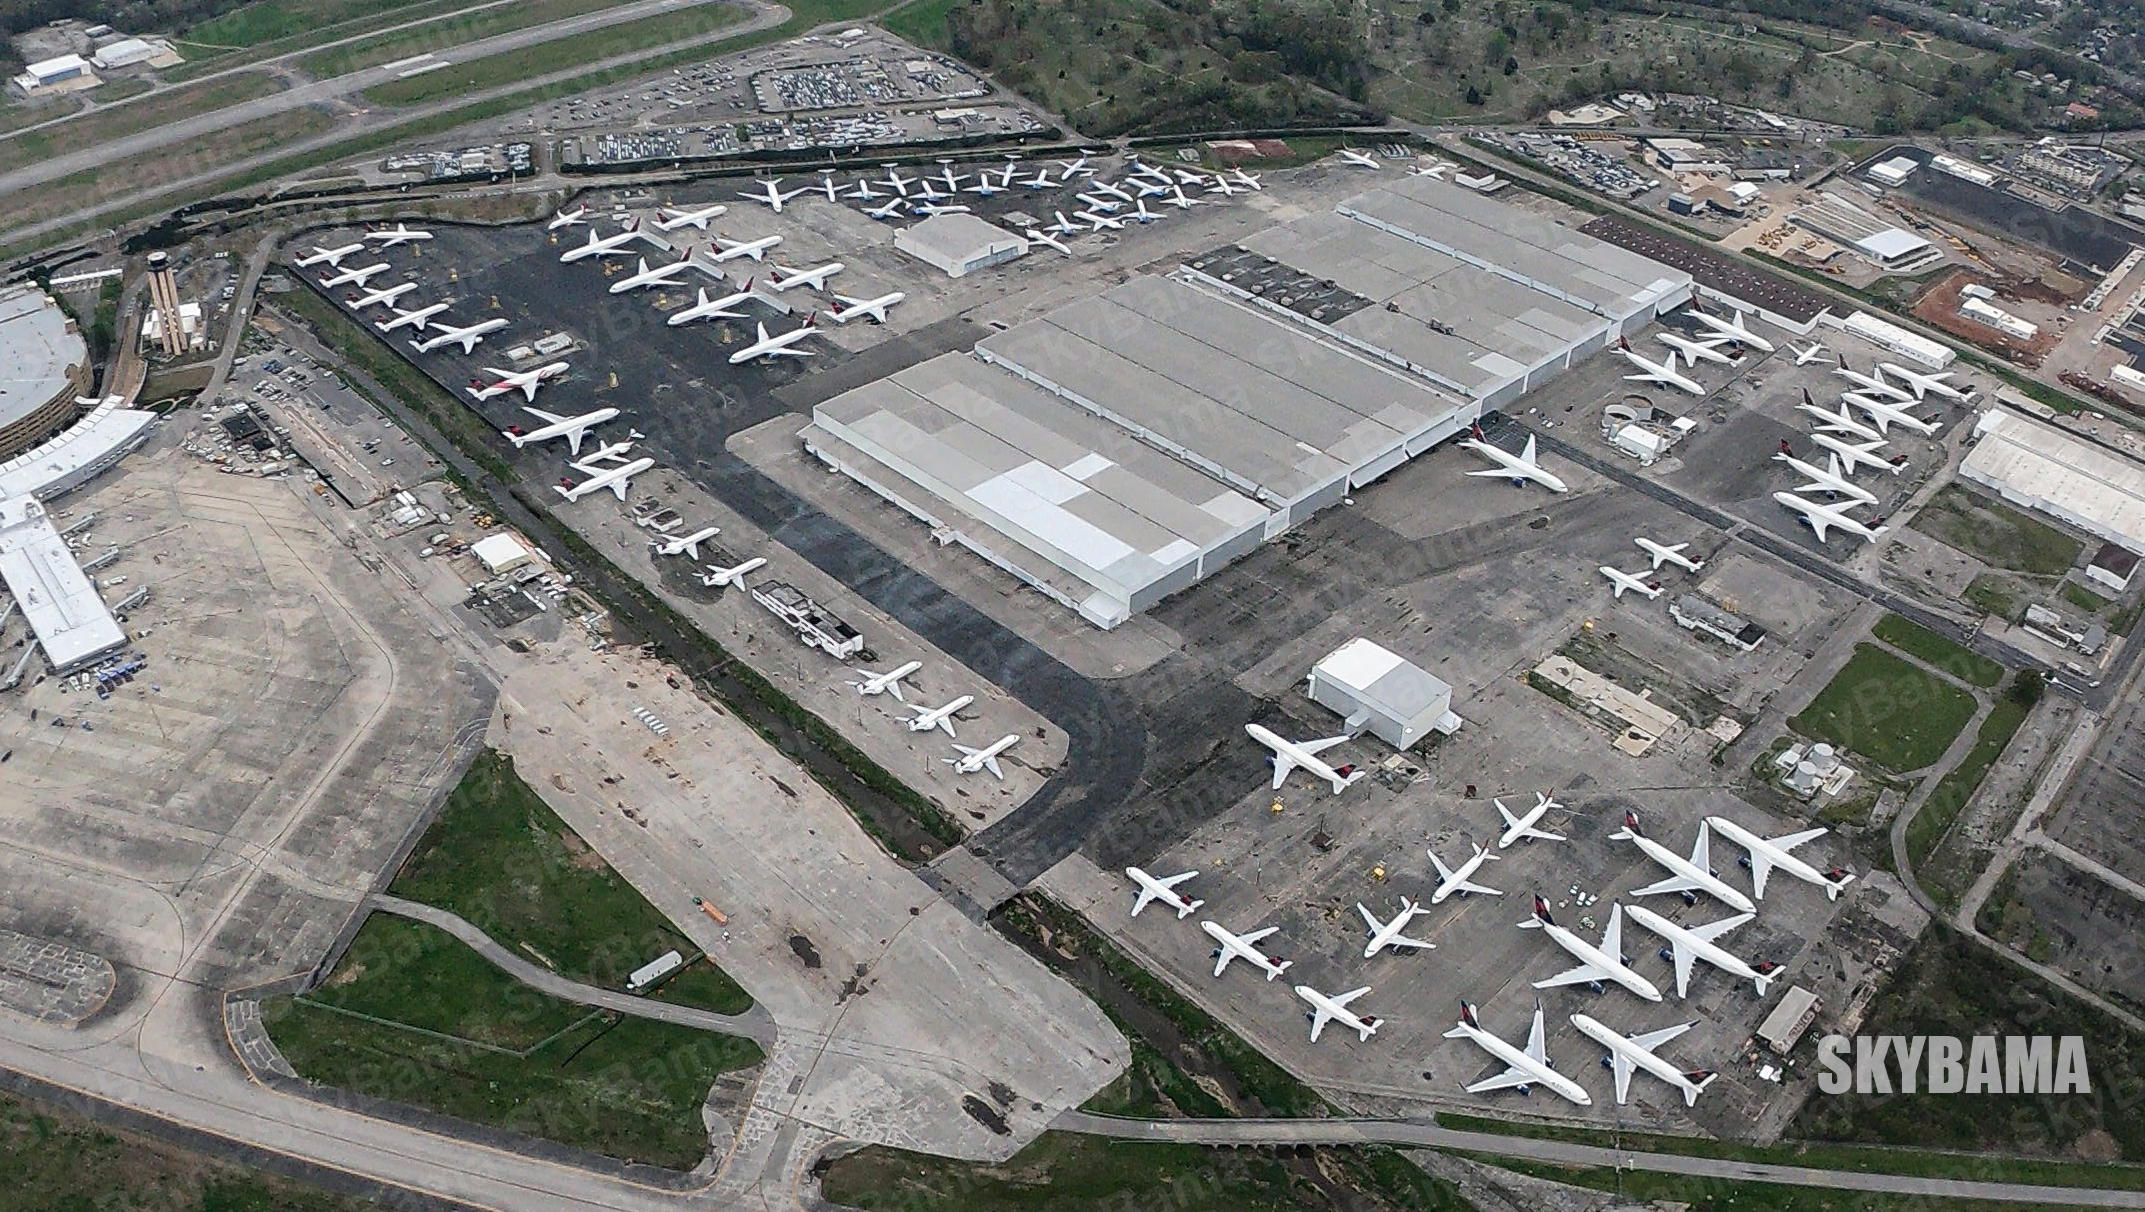 Delta parks 40+ jets at Birmingham Airport amid Coronavirus